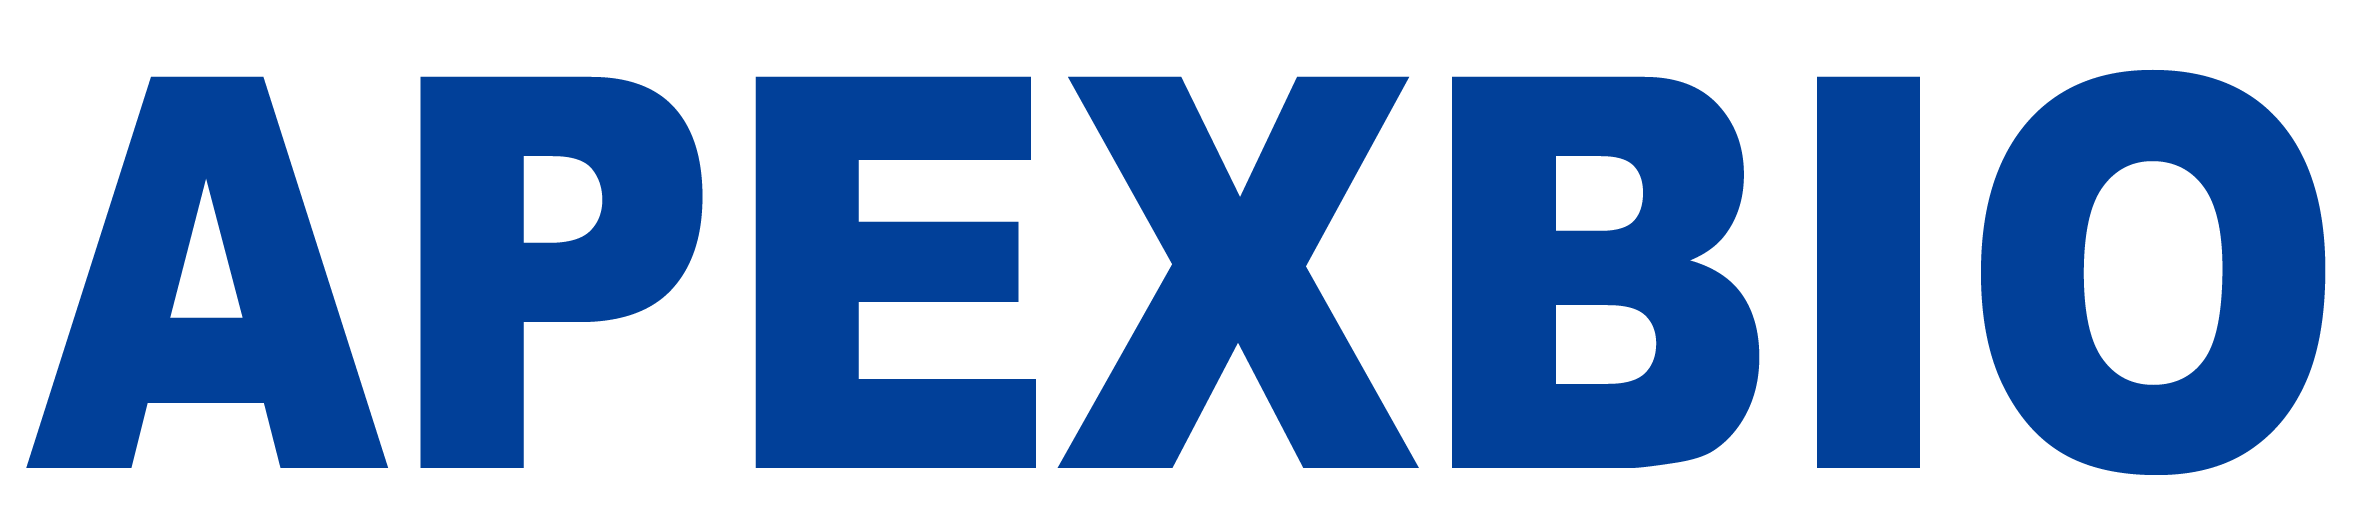 apexbio-logo.png